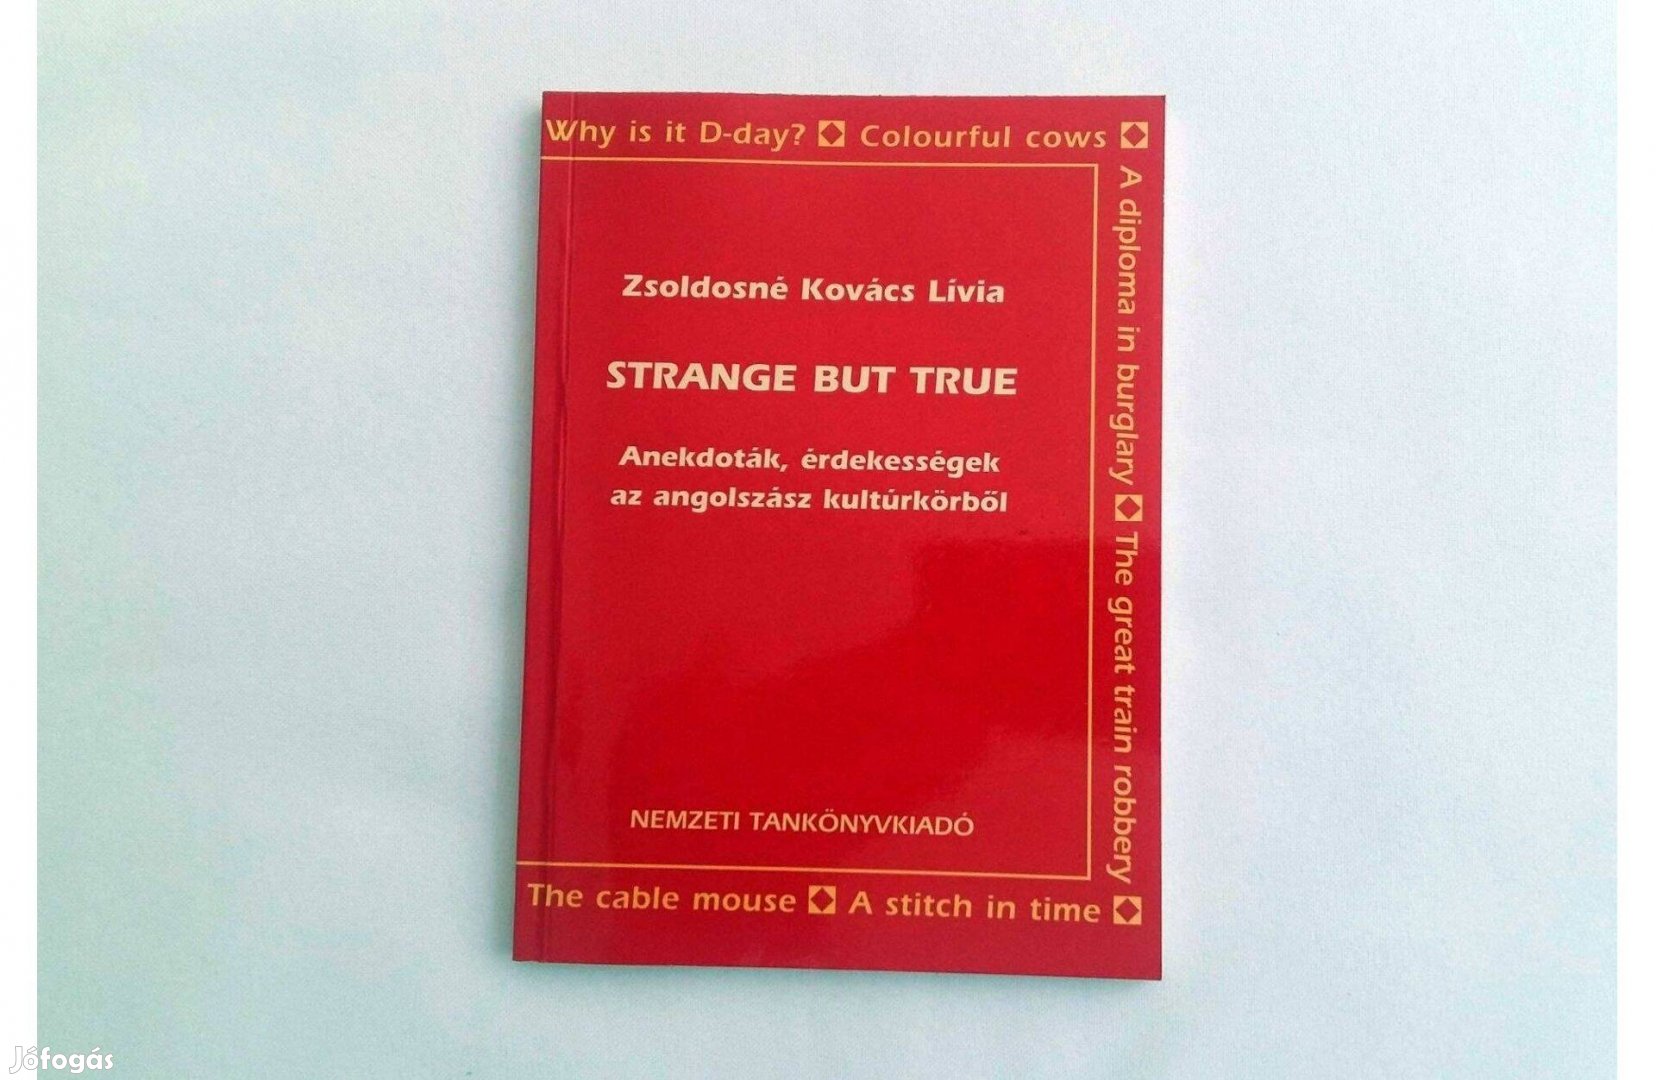 Zsoldosné Kovács Lívia: Strange But True (Nemzeti Tankönyvkiadó)